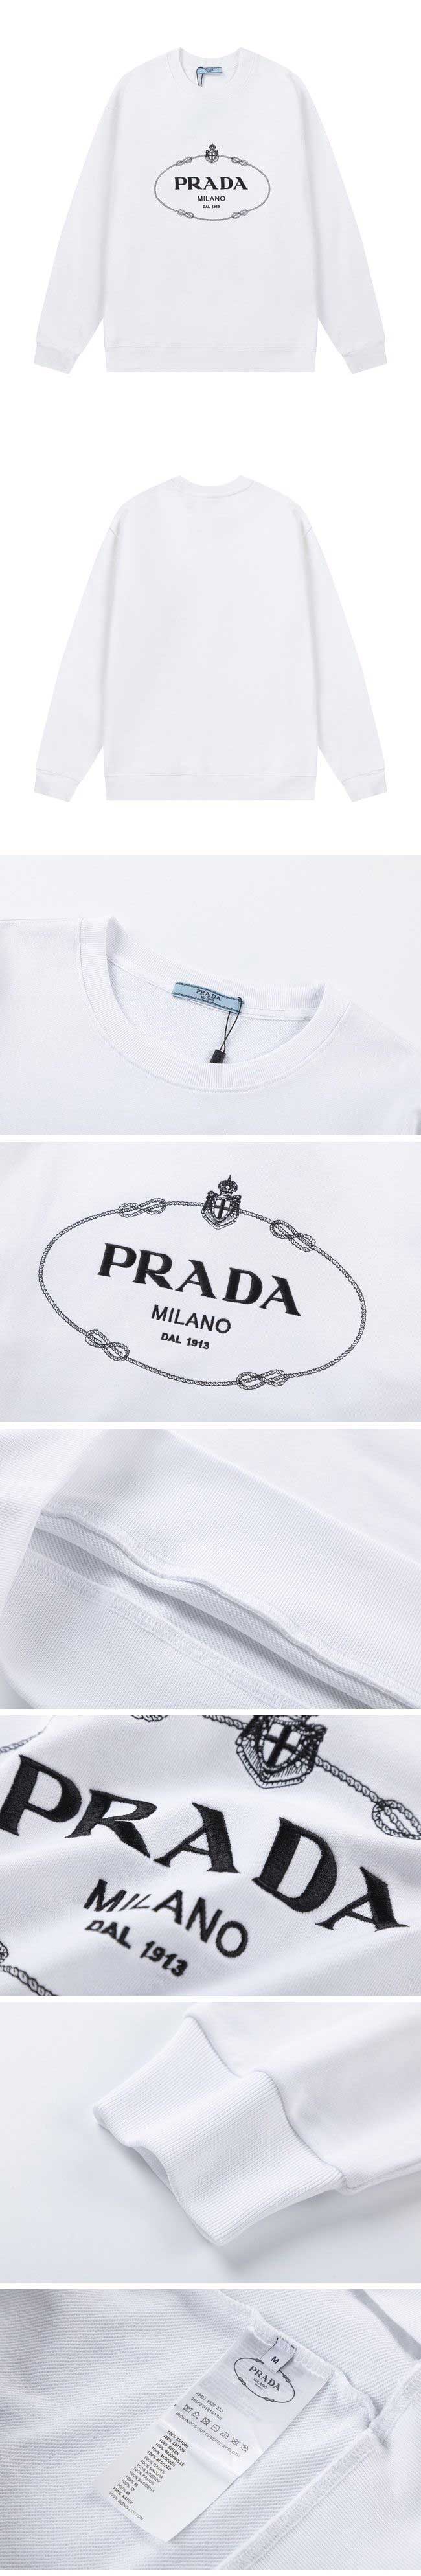 Prada Milano Logo Sweat プラダ ミラノ ロゴ スウェット ホワイト